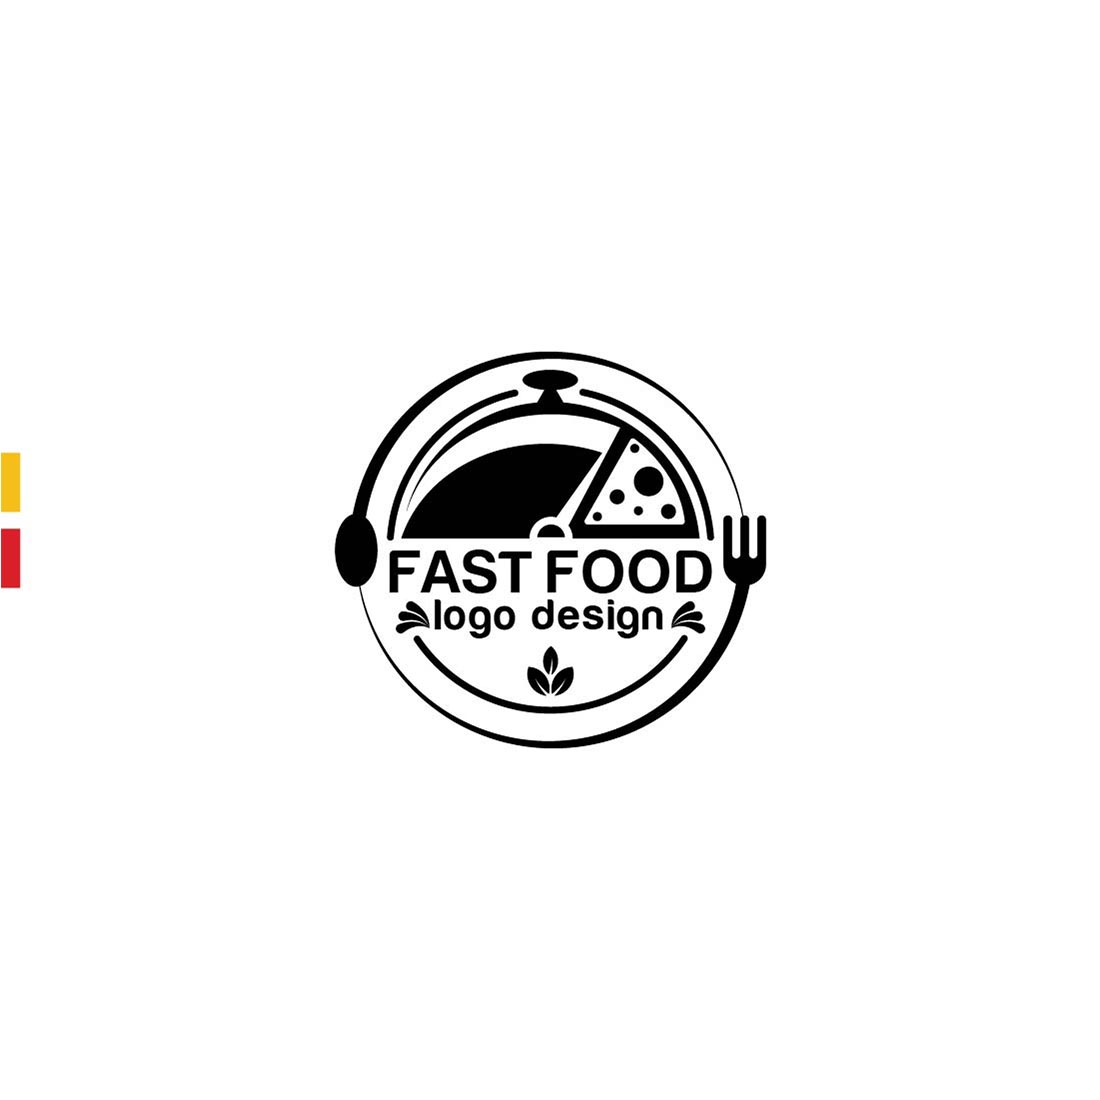 2 Fast Food Editable Logo Design black and white.